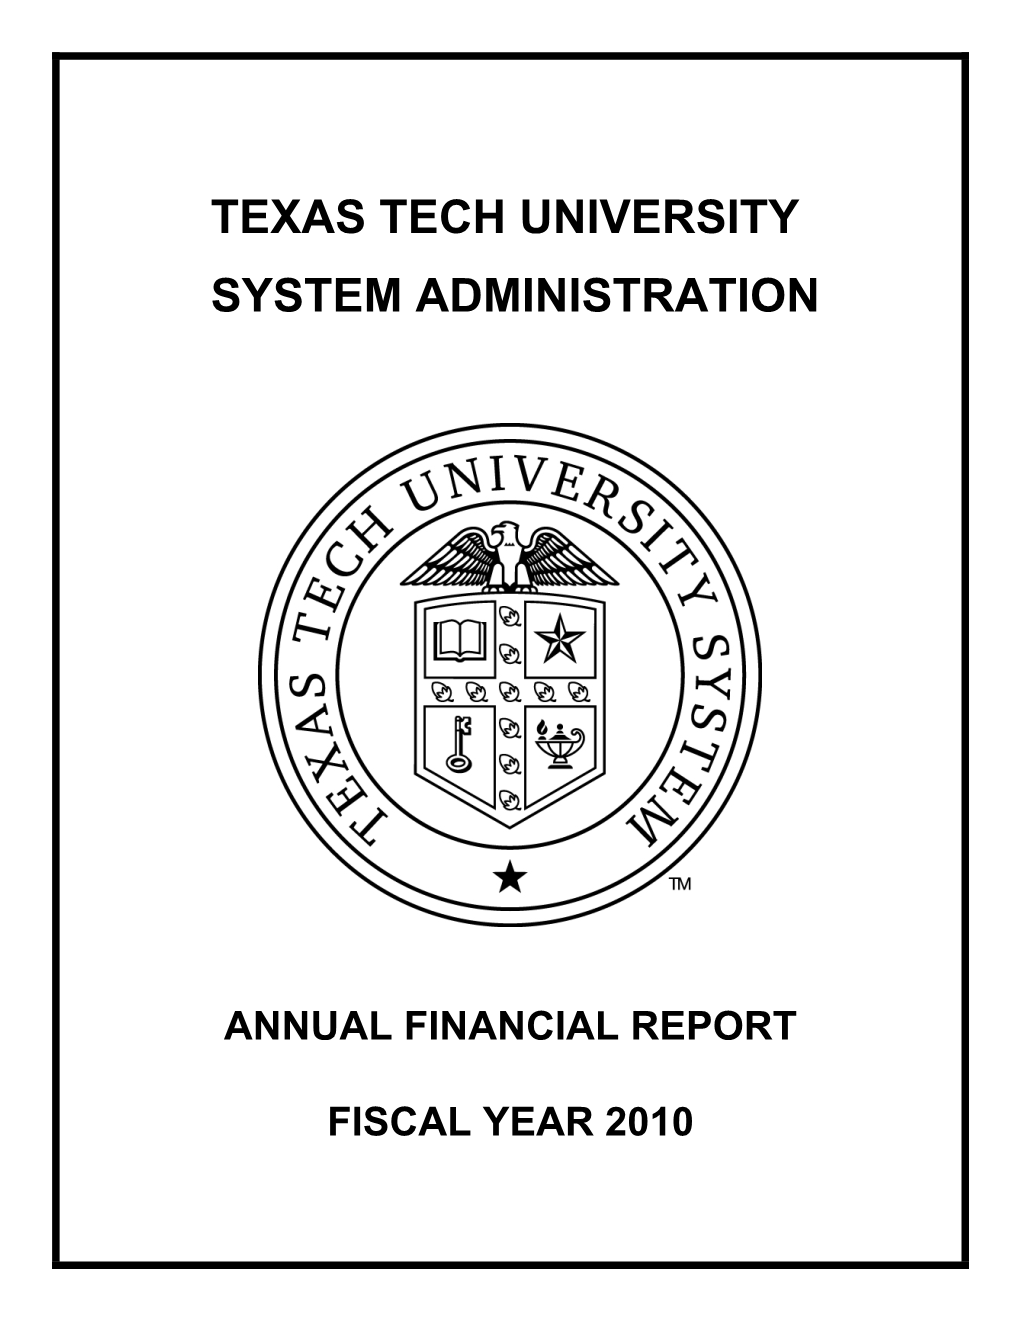 Texas Tech University System Administration